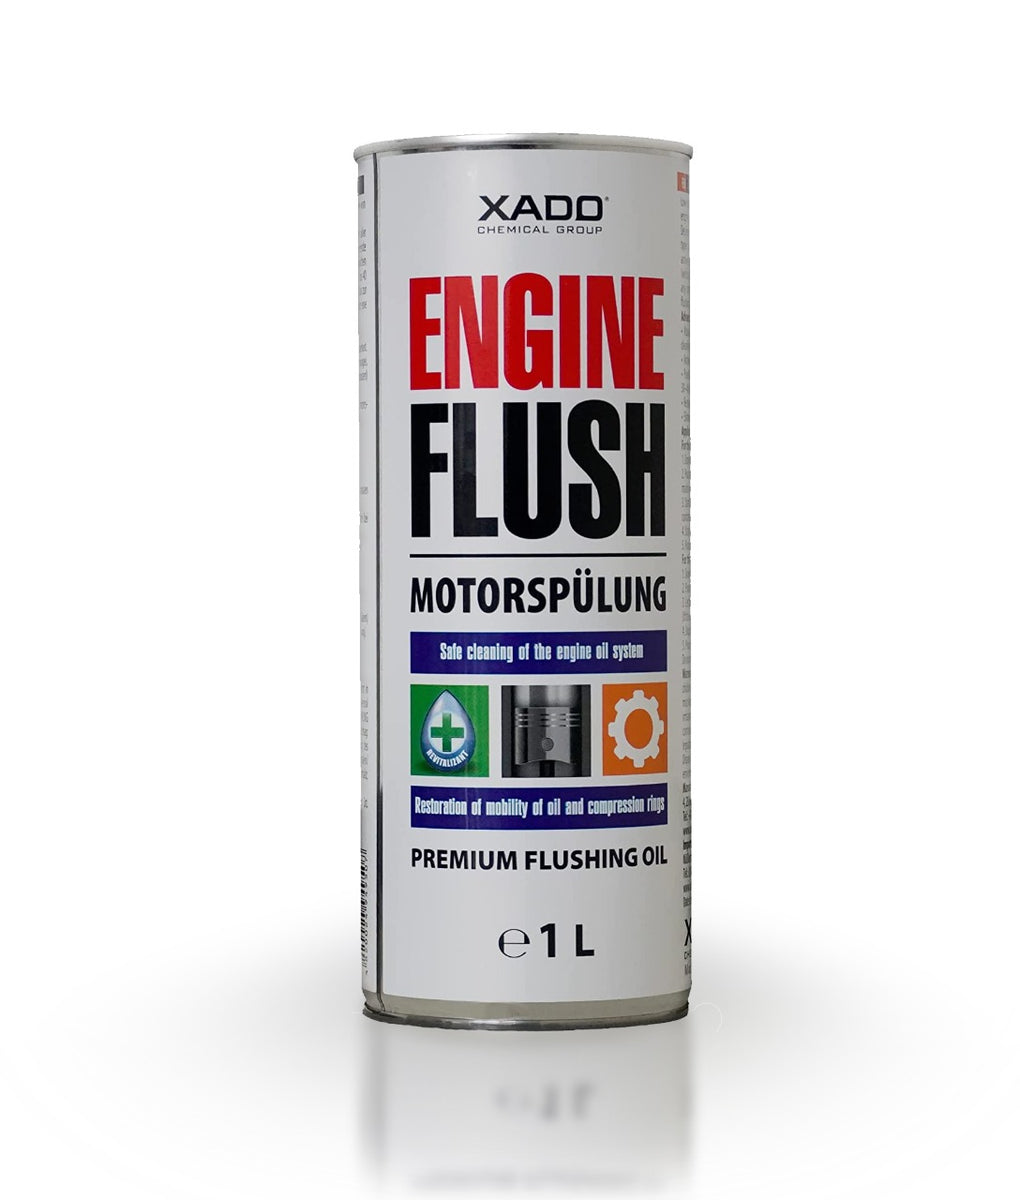 XADO Spülöl - Engine Flush - Motor & Getriebe Spülung mit